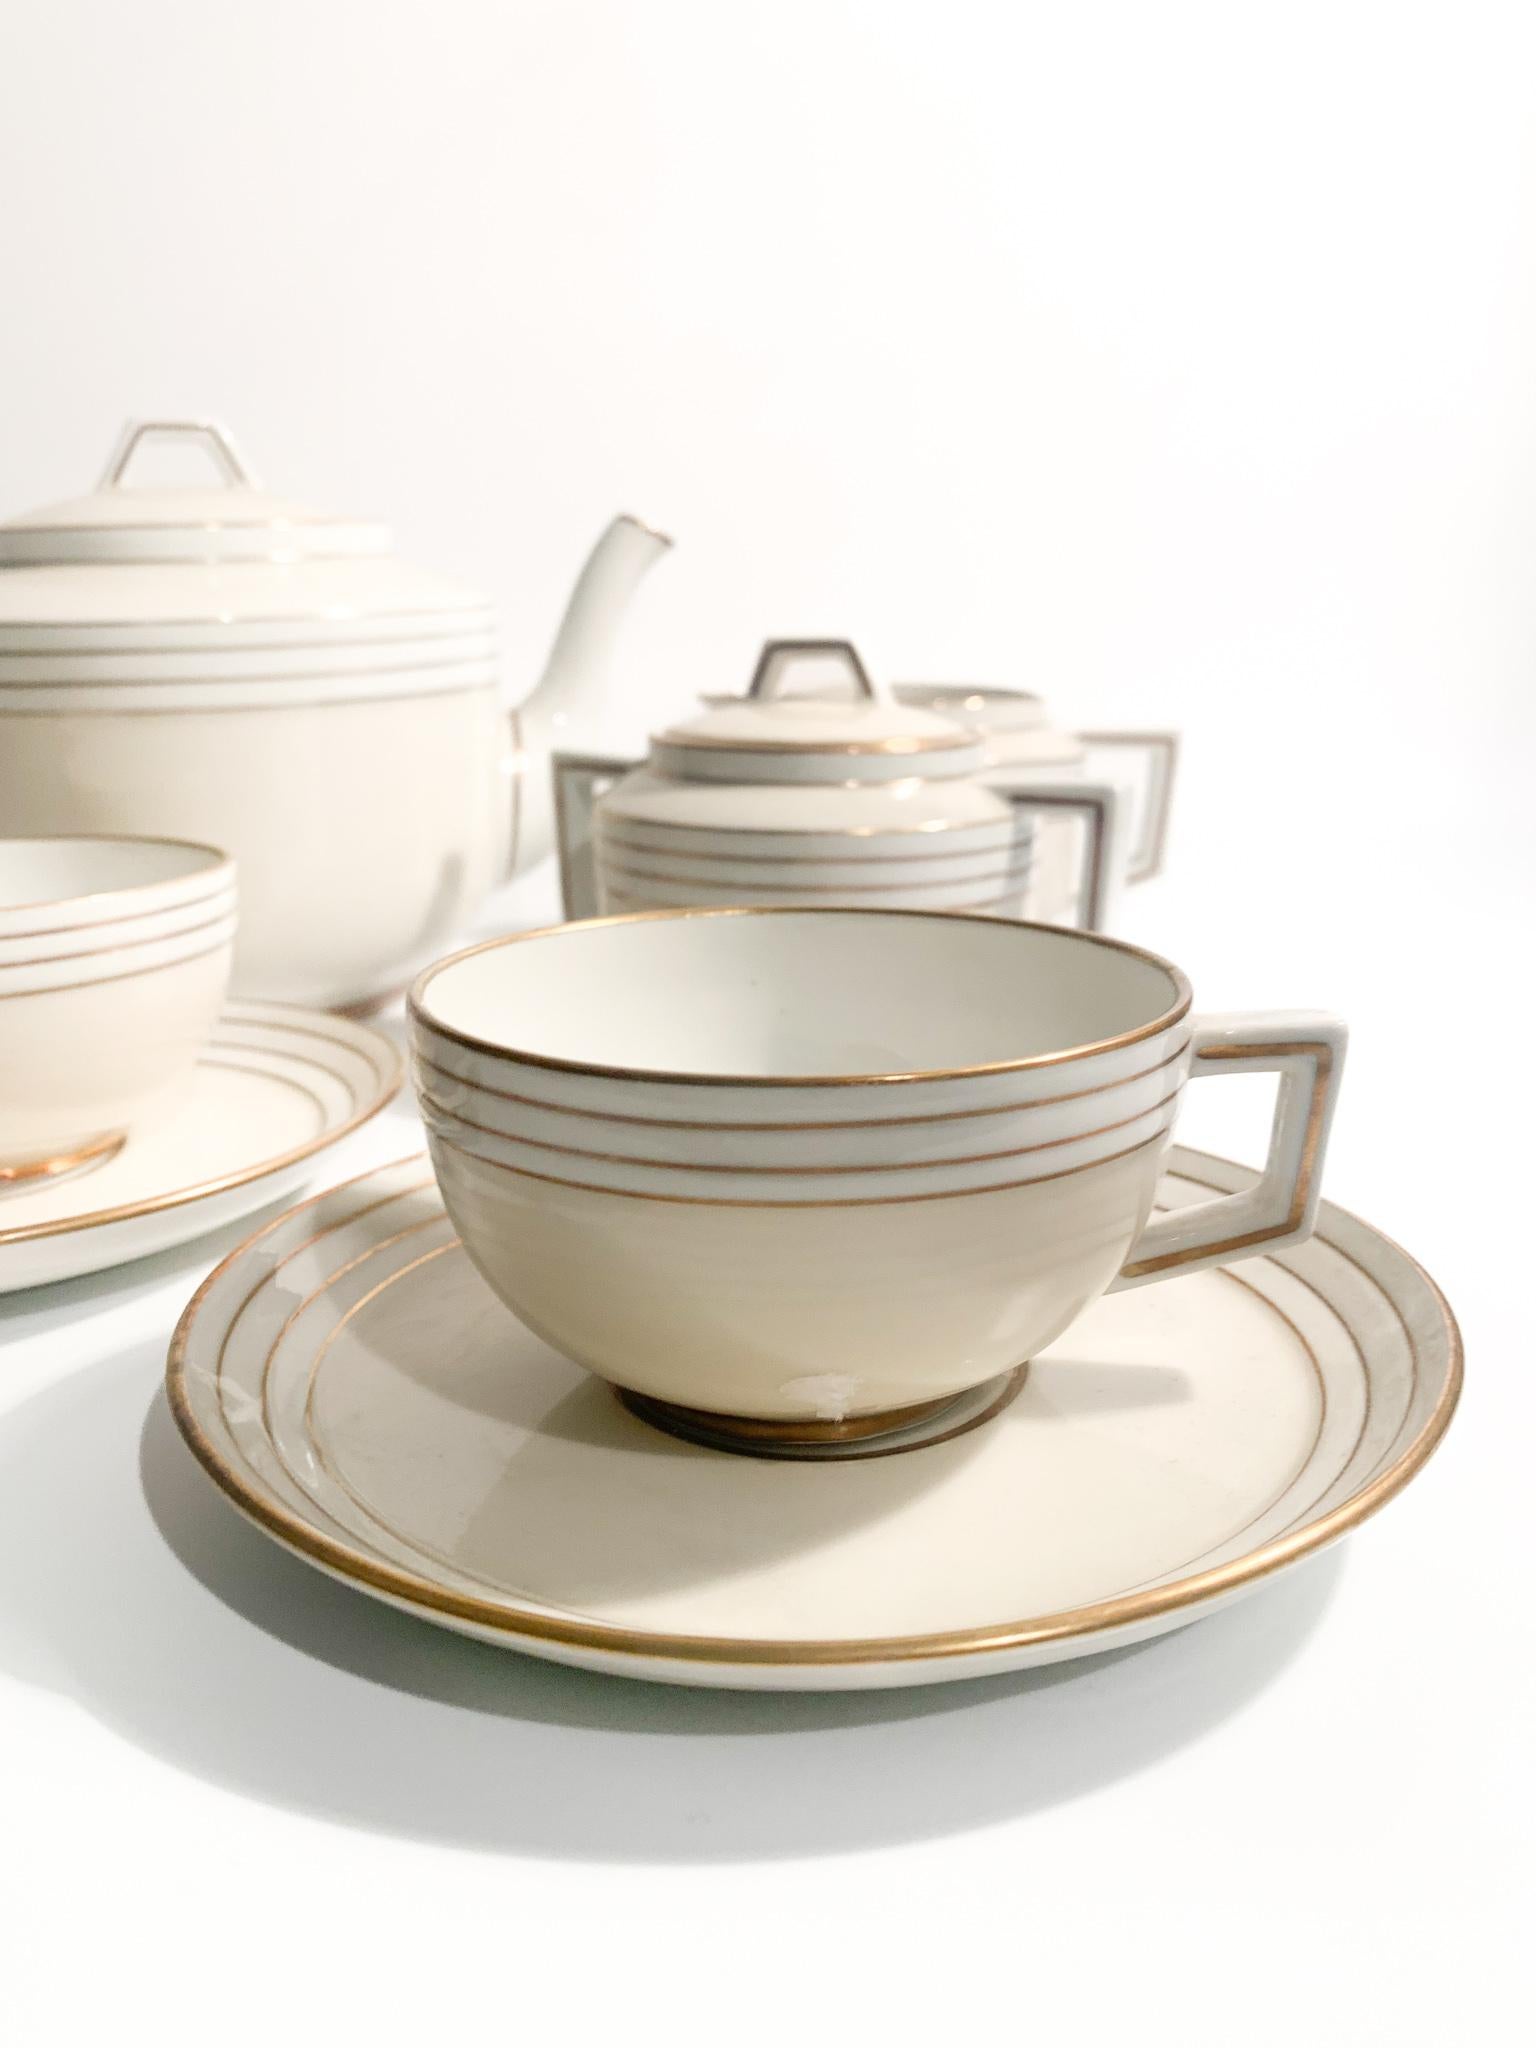 Twelve Richard Ginori Decò Tea Set in Porcelain from the 1940s In Fair Condition For Sale In Milano, MI